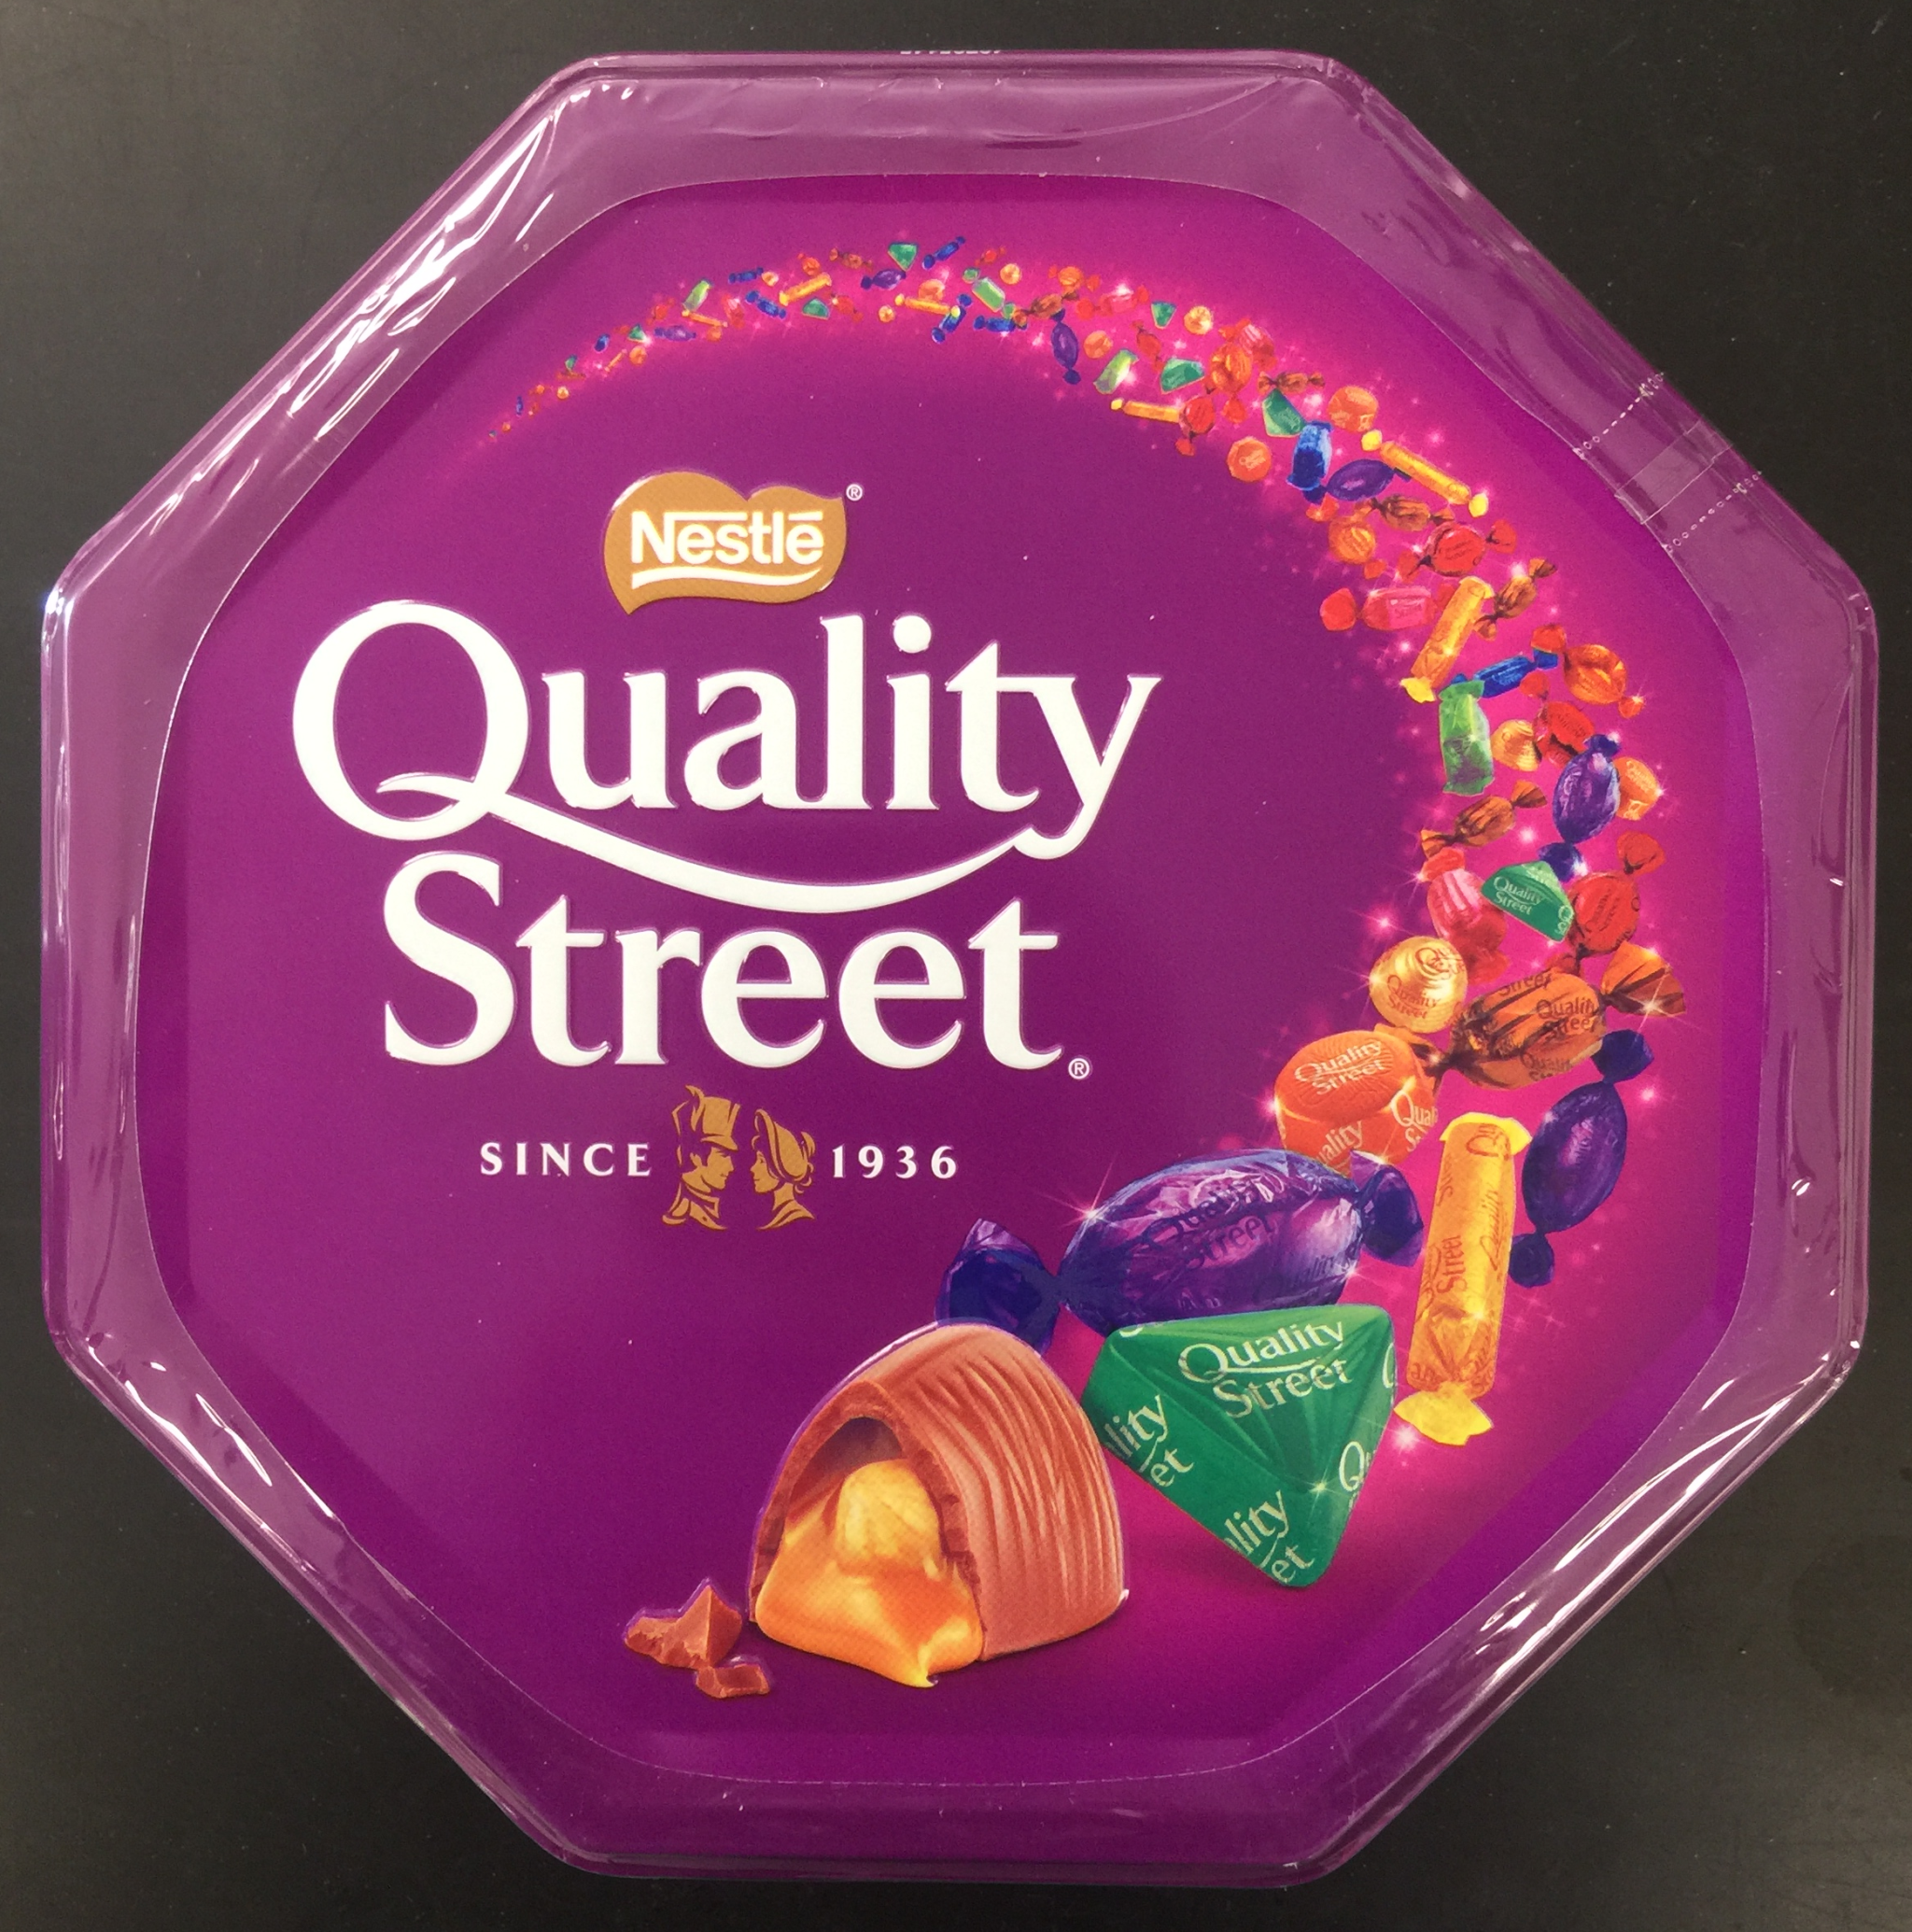 Quality street chocolats - Nestlé